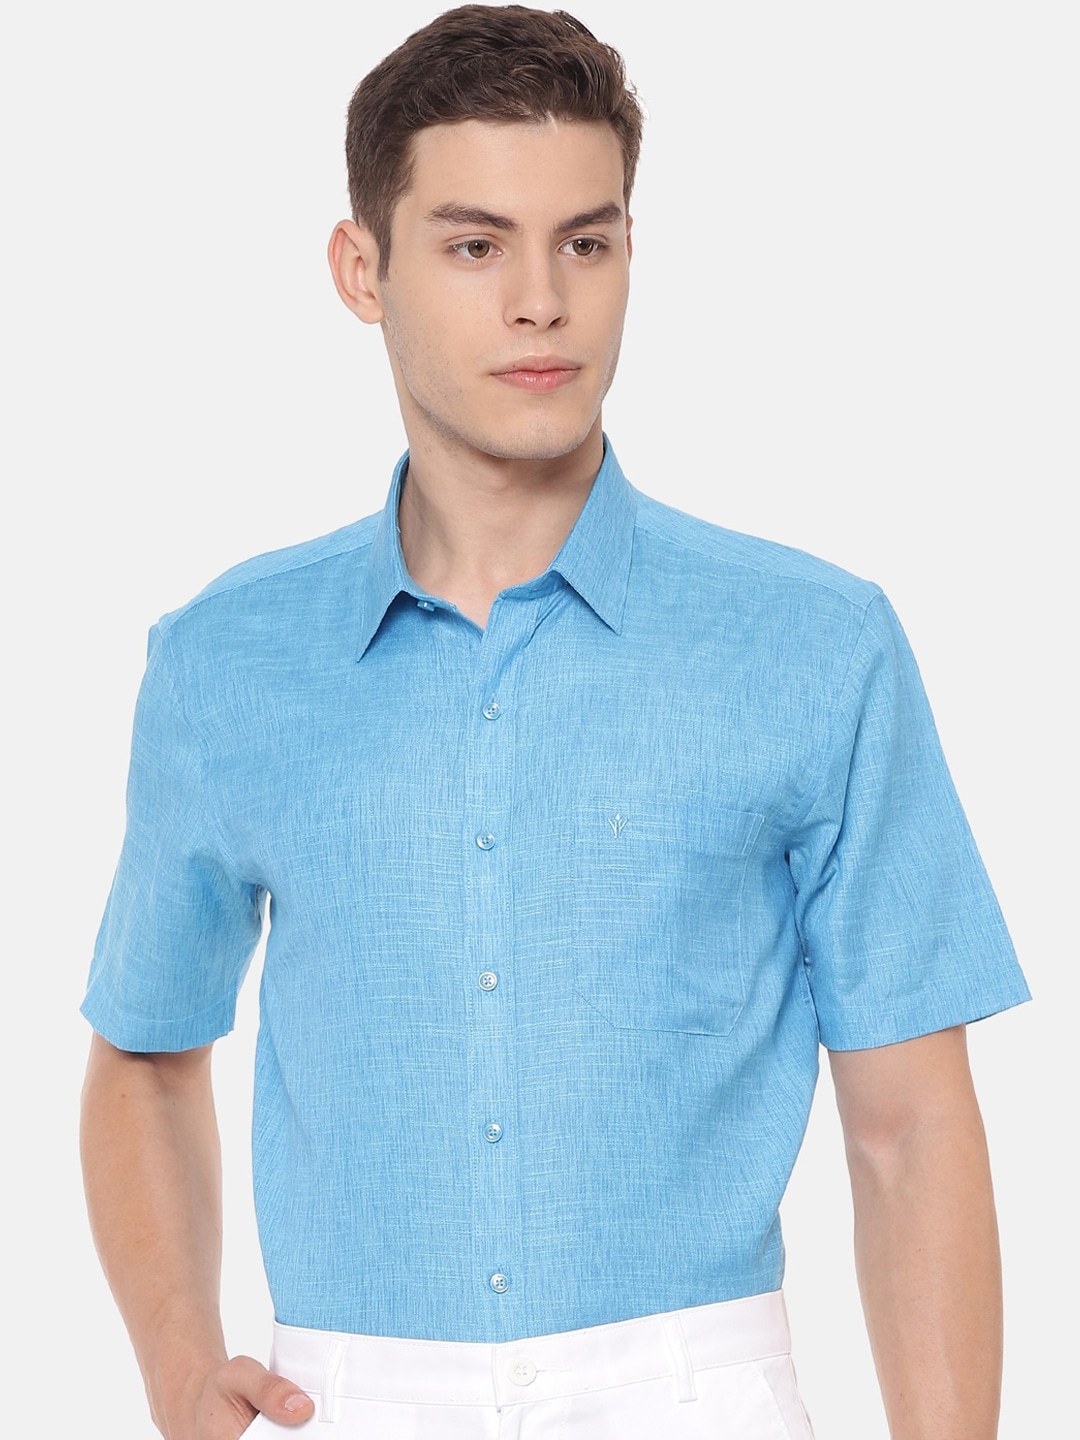 RAMRAJ COTTON Men Sky Blue Solid Original Casual Shirt